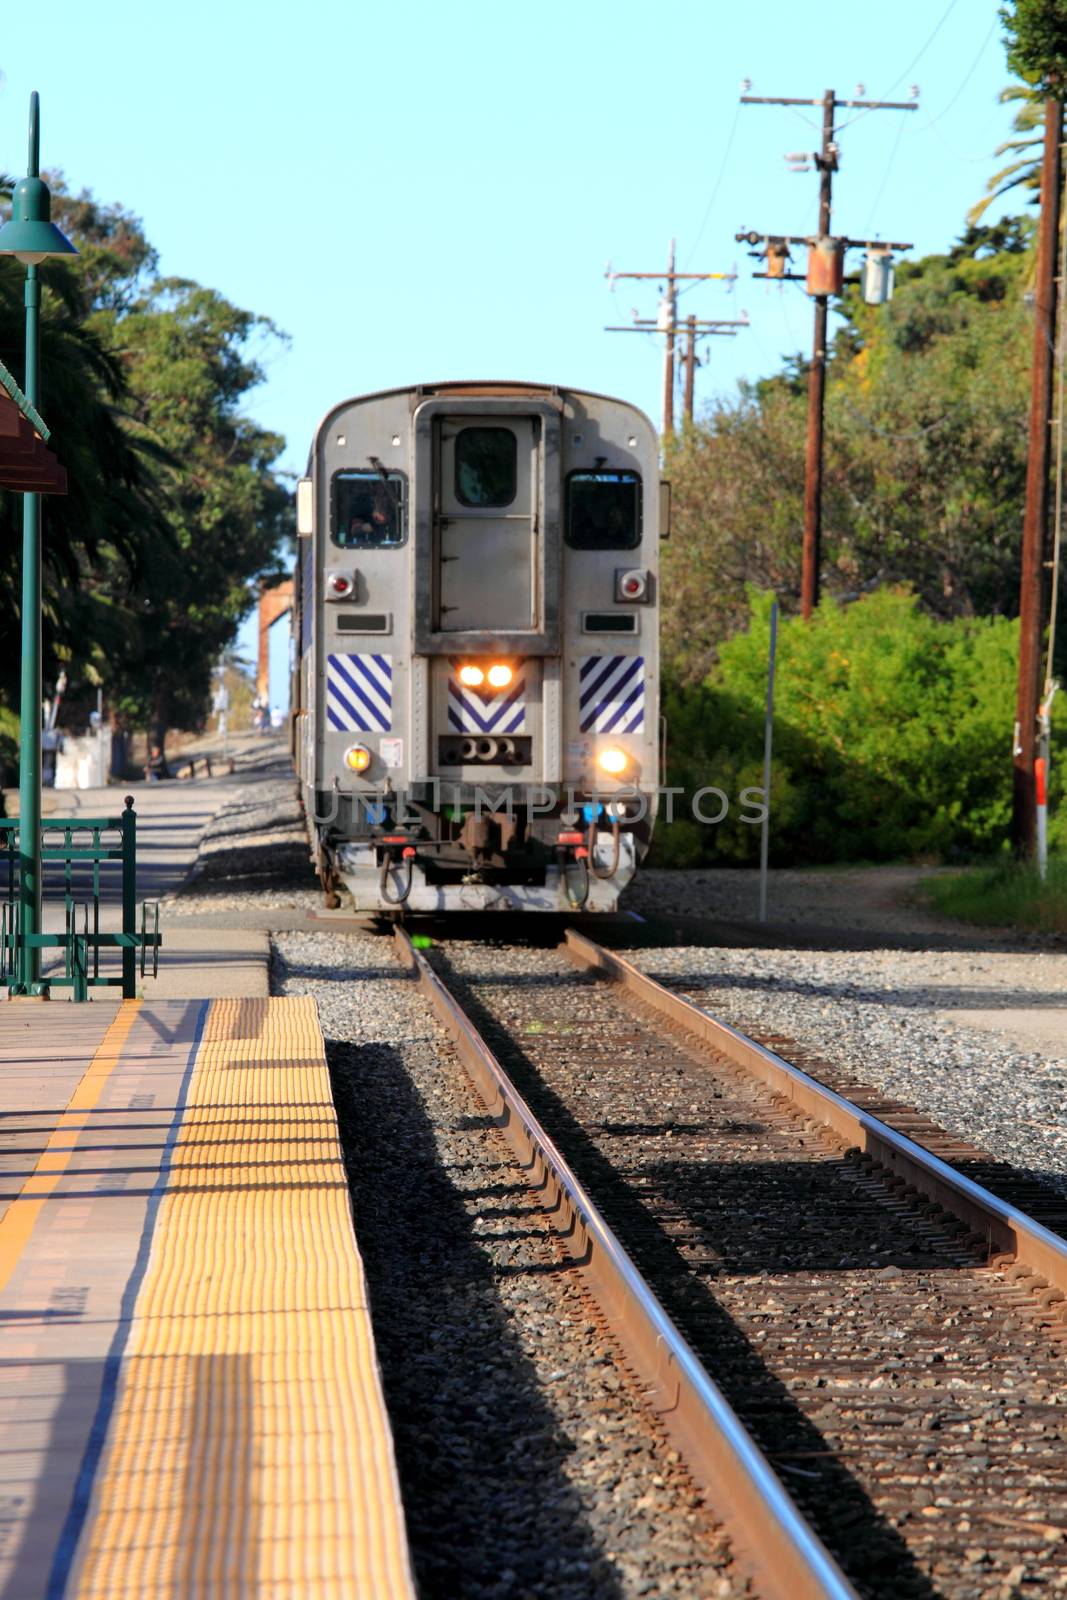 Ventura Train Station by hlehnerer